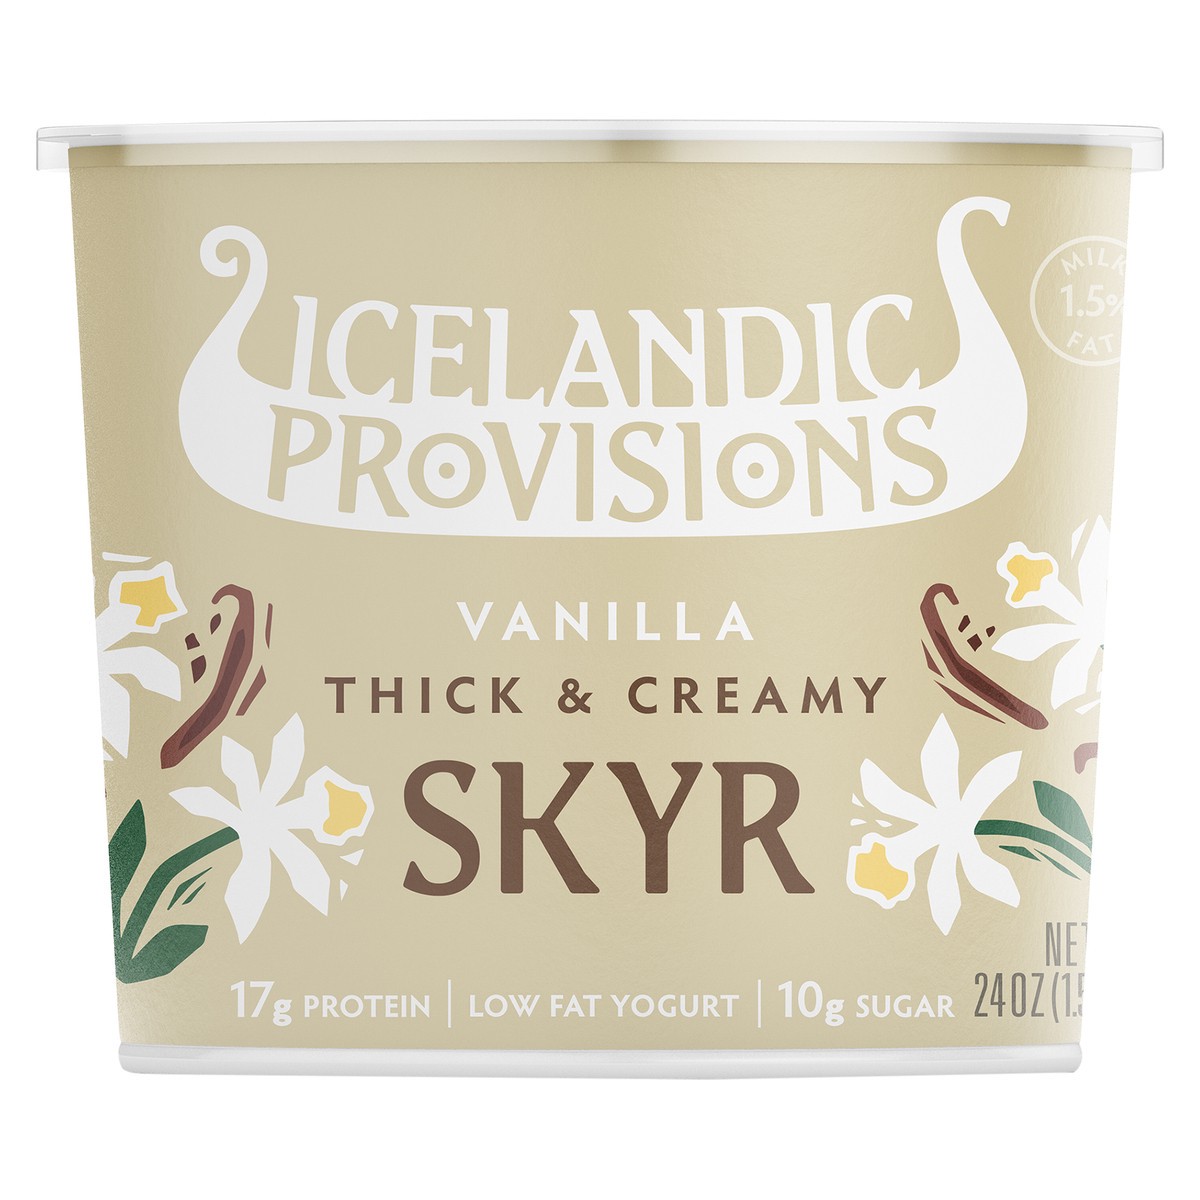 slide 5 of 7, Icelandic Provisions Vanilla Thick & Creamy Low Fat Skyr 24 oz, 24 oz